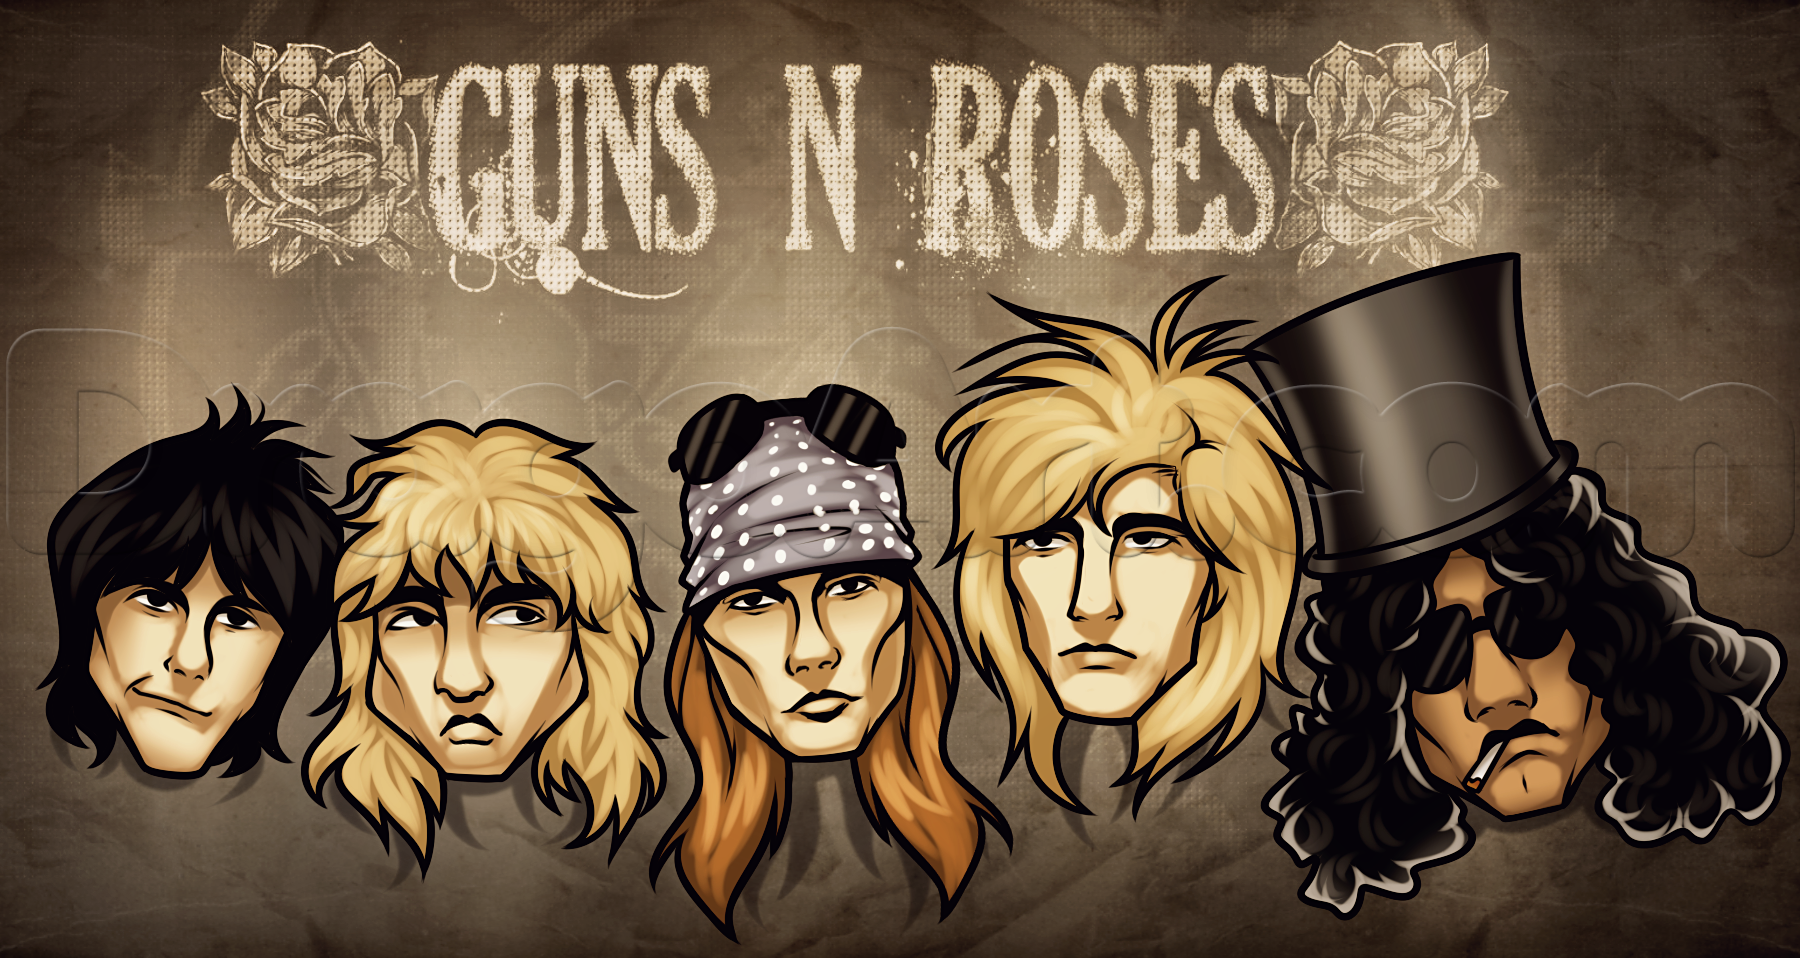 High Resolution Wallpaper | Guns N' Roses 1800x958 px